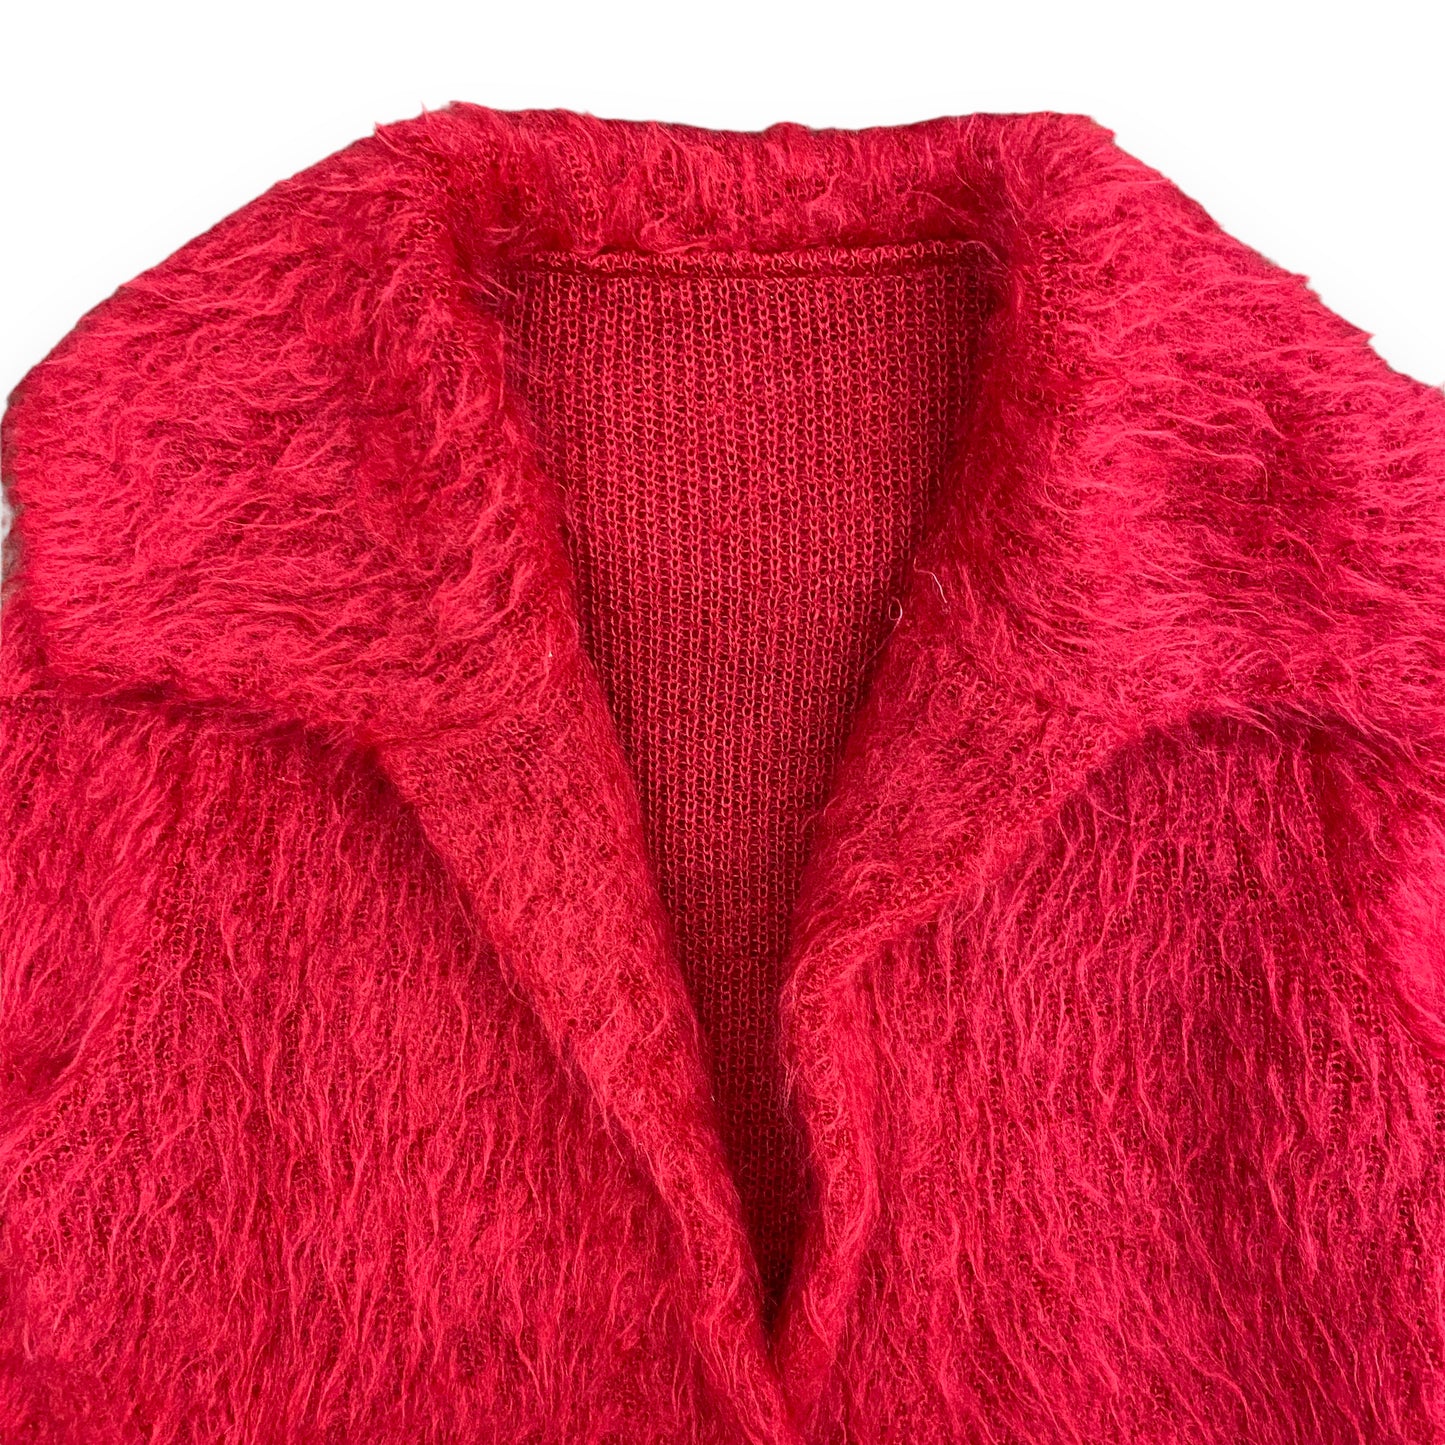 Vintage 1970s Shaggy Pink Mohair Oversized Collar Cardigan - Size Medium